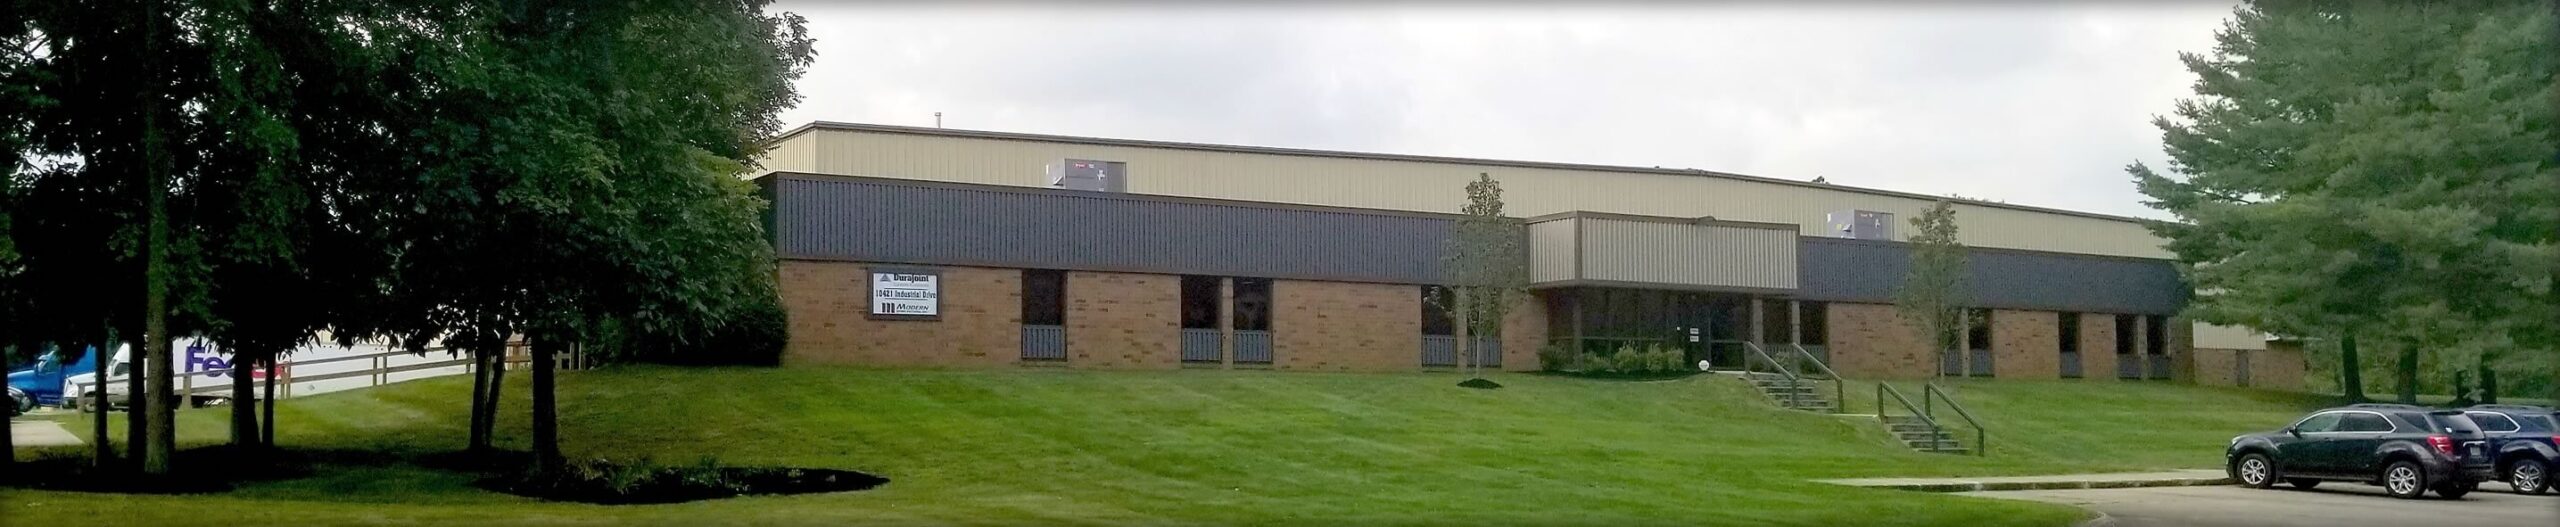 Modern Retail Solutions - Company Headquarters in Garrettsville, Ohio